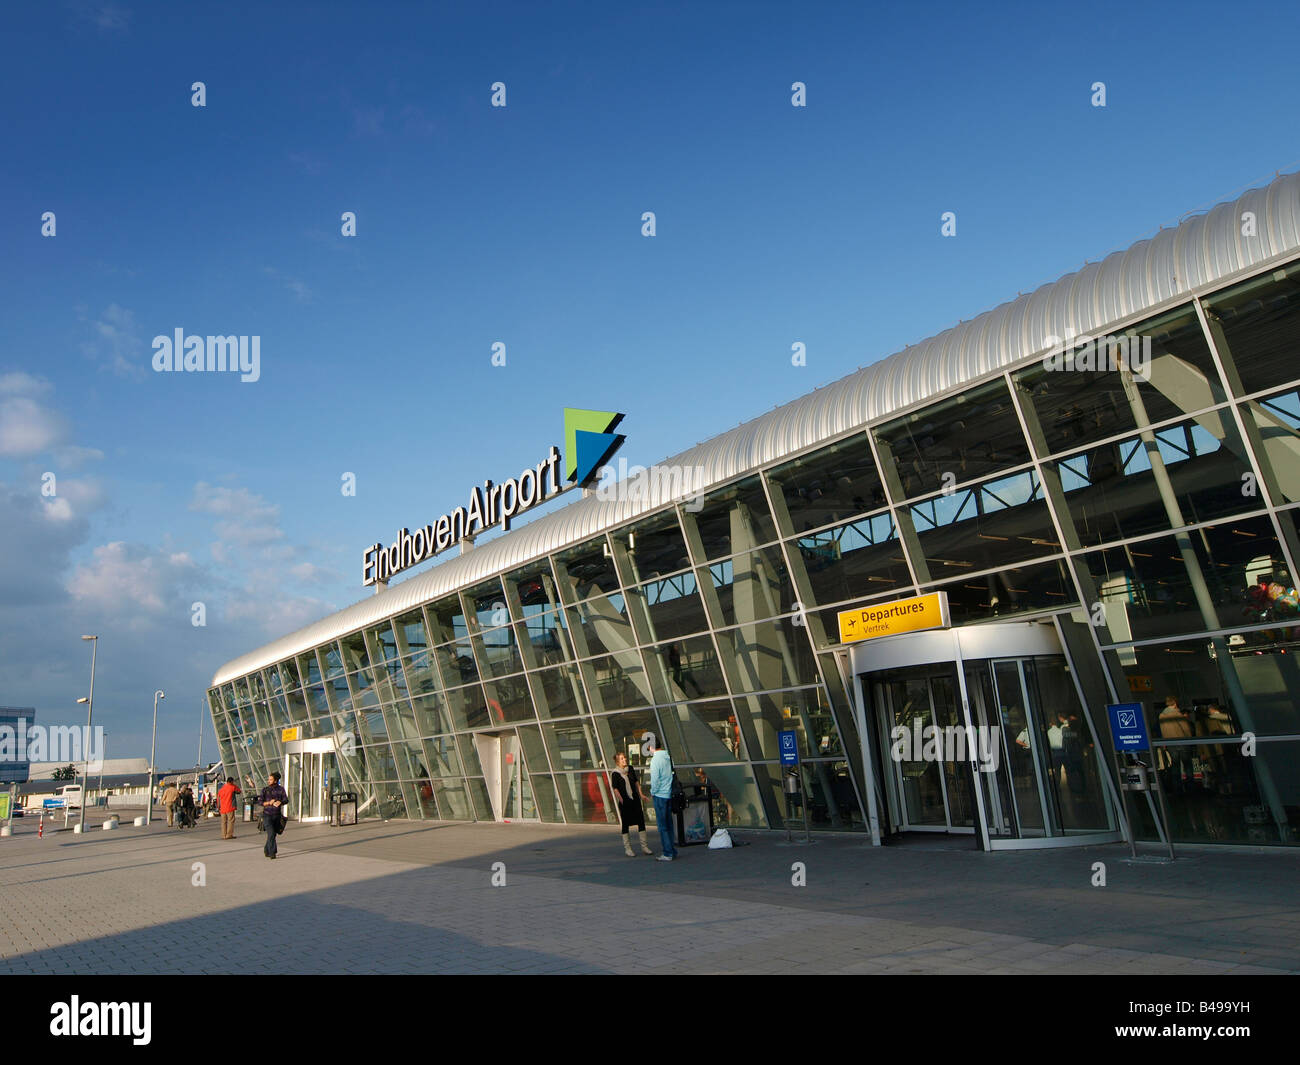 Eindhoven Airport arrivals departures terminal building Eindhoven Noord Brabant the Netherlands Stock Photo